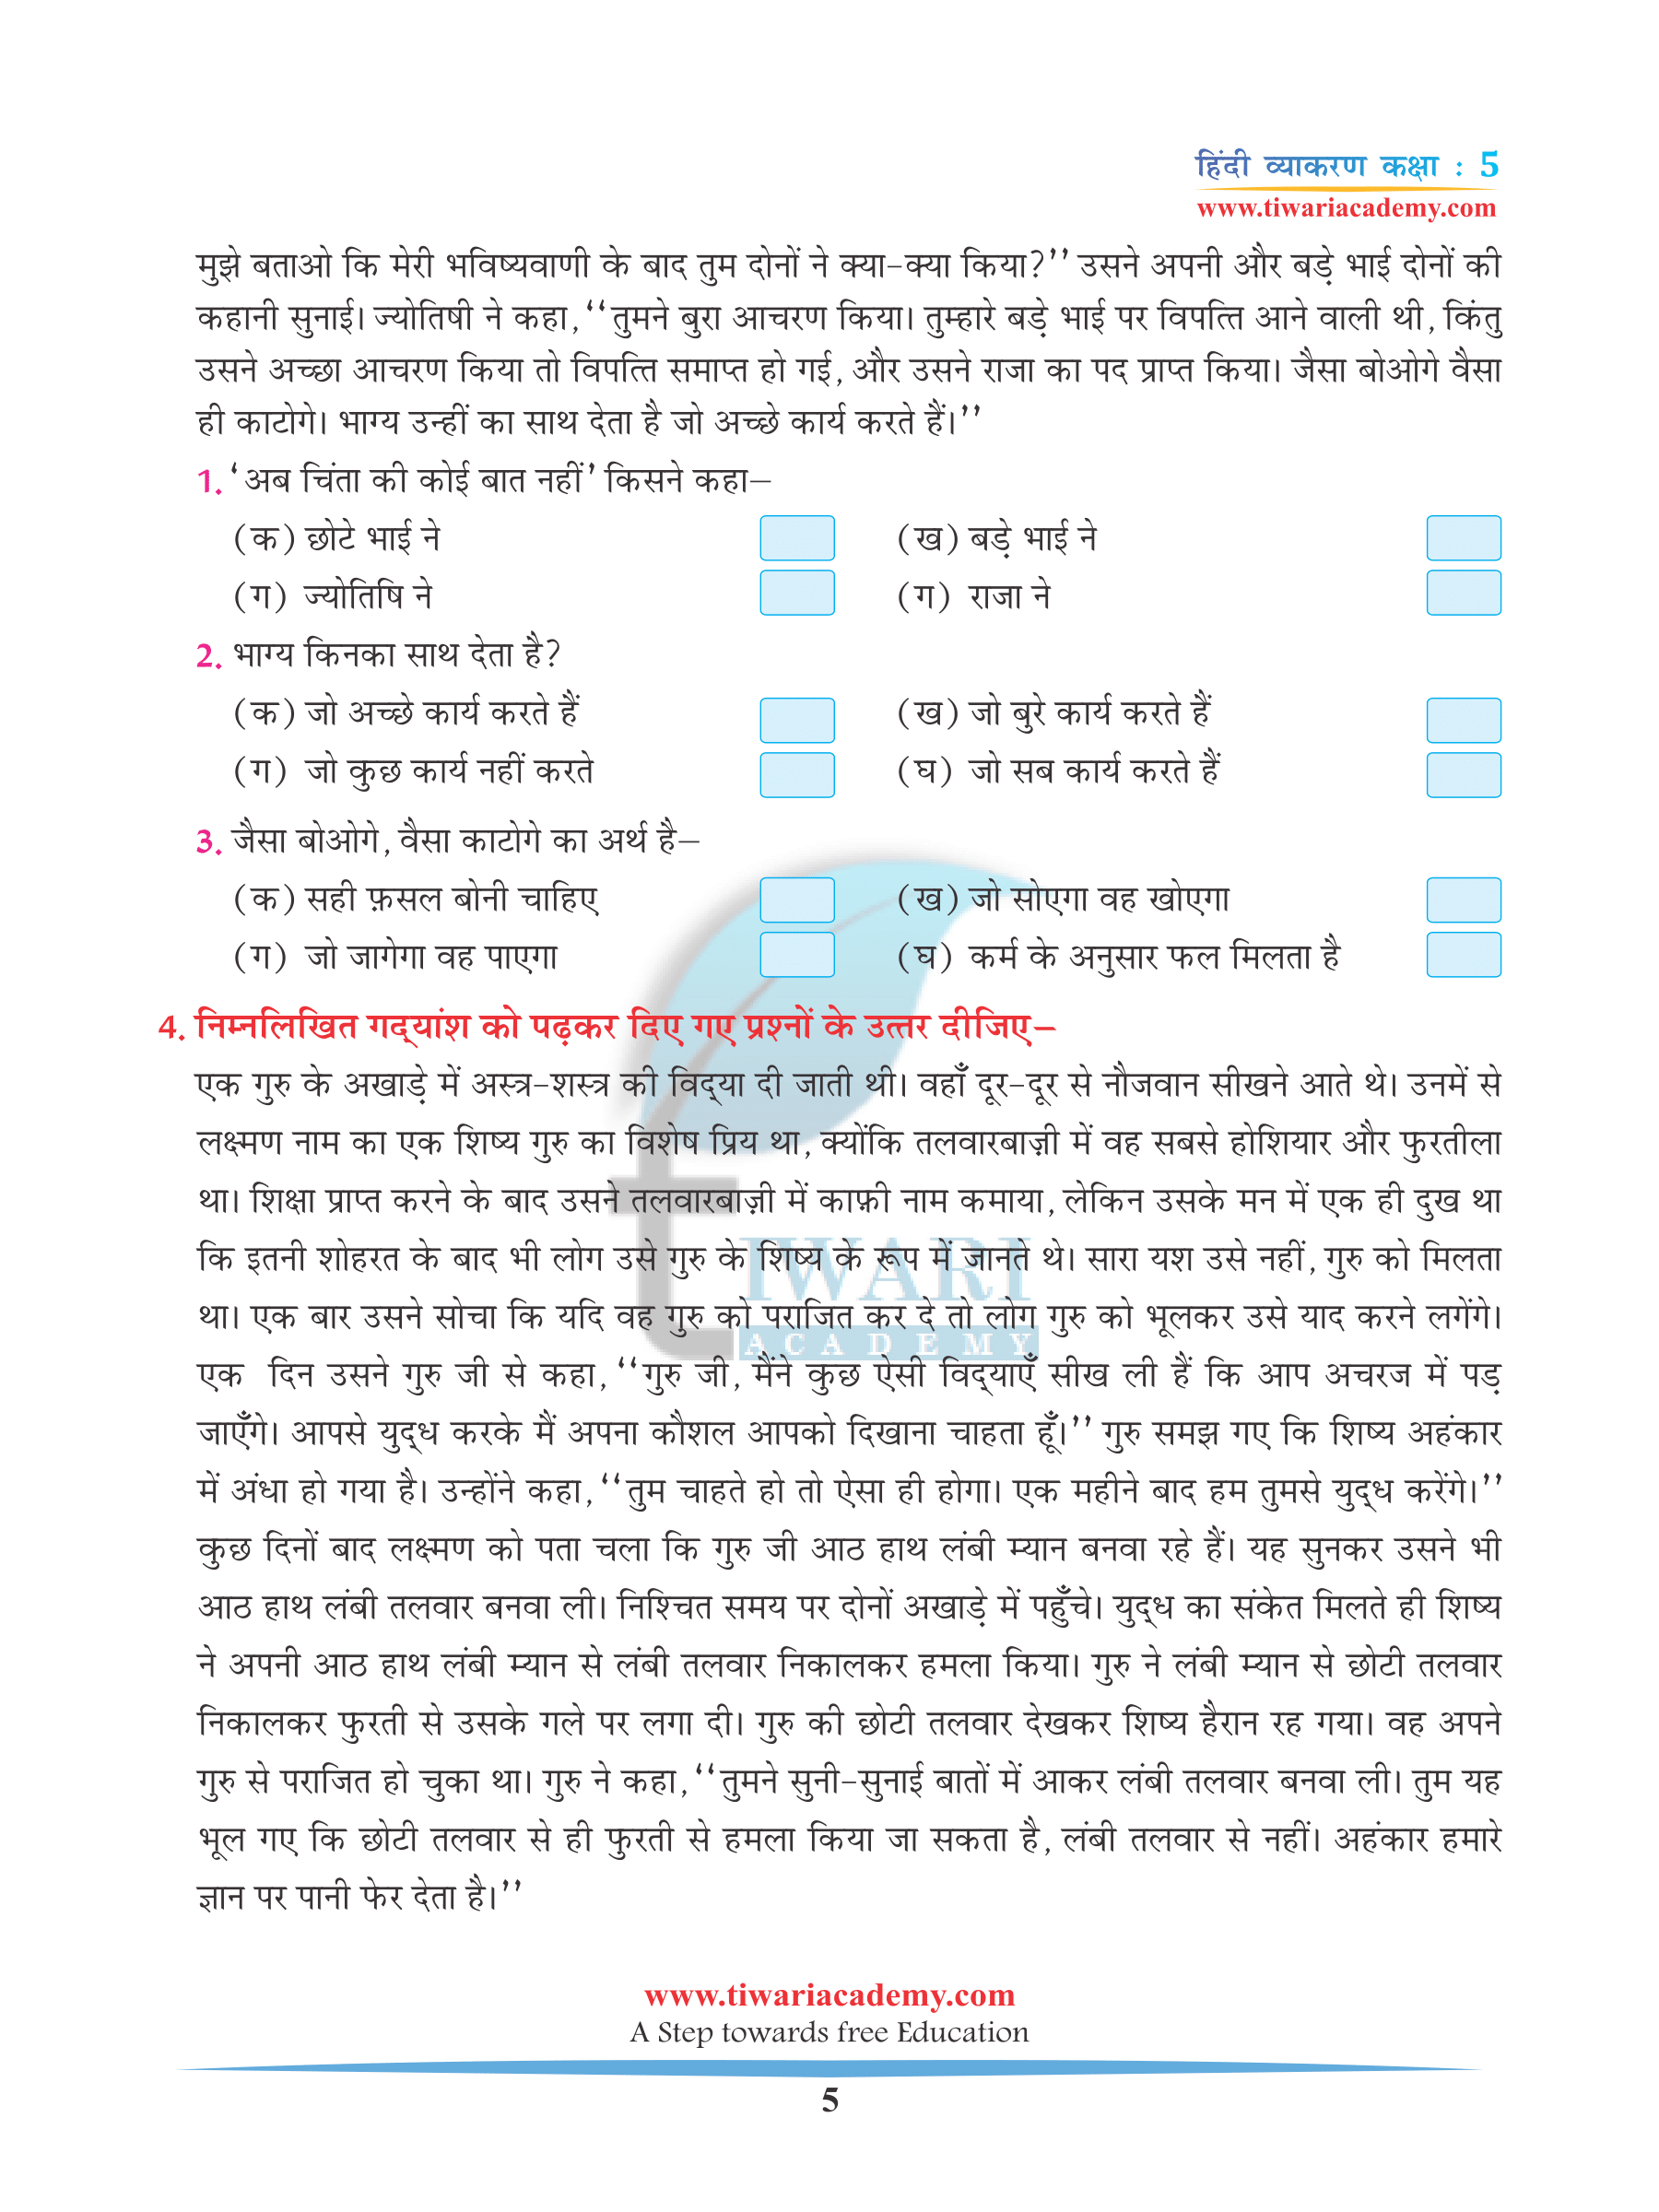 homework for class 5 in hindi